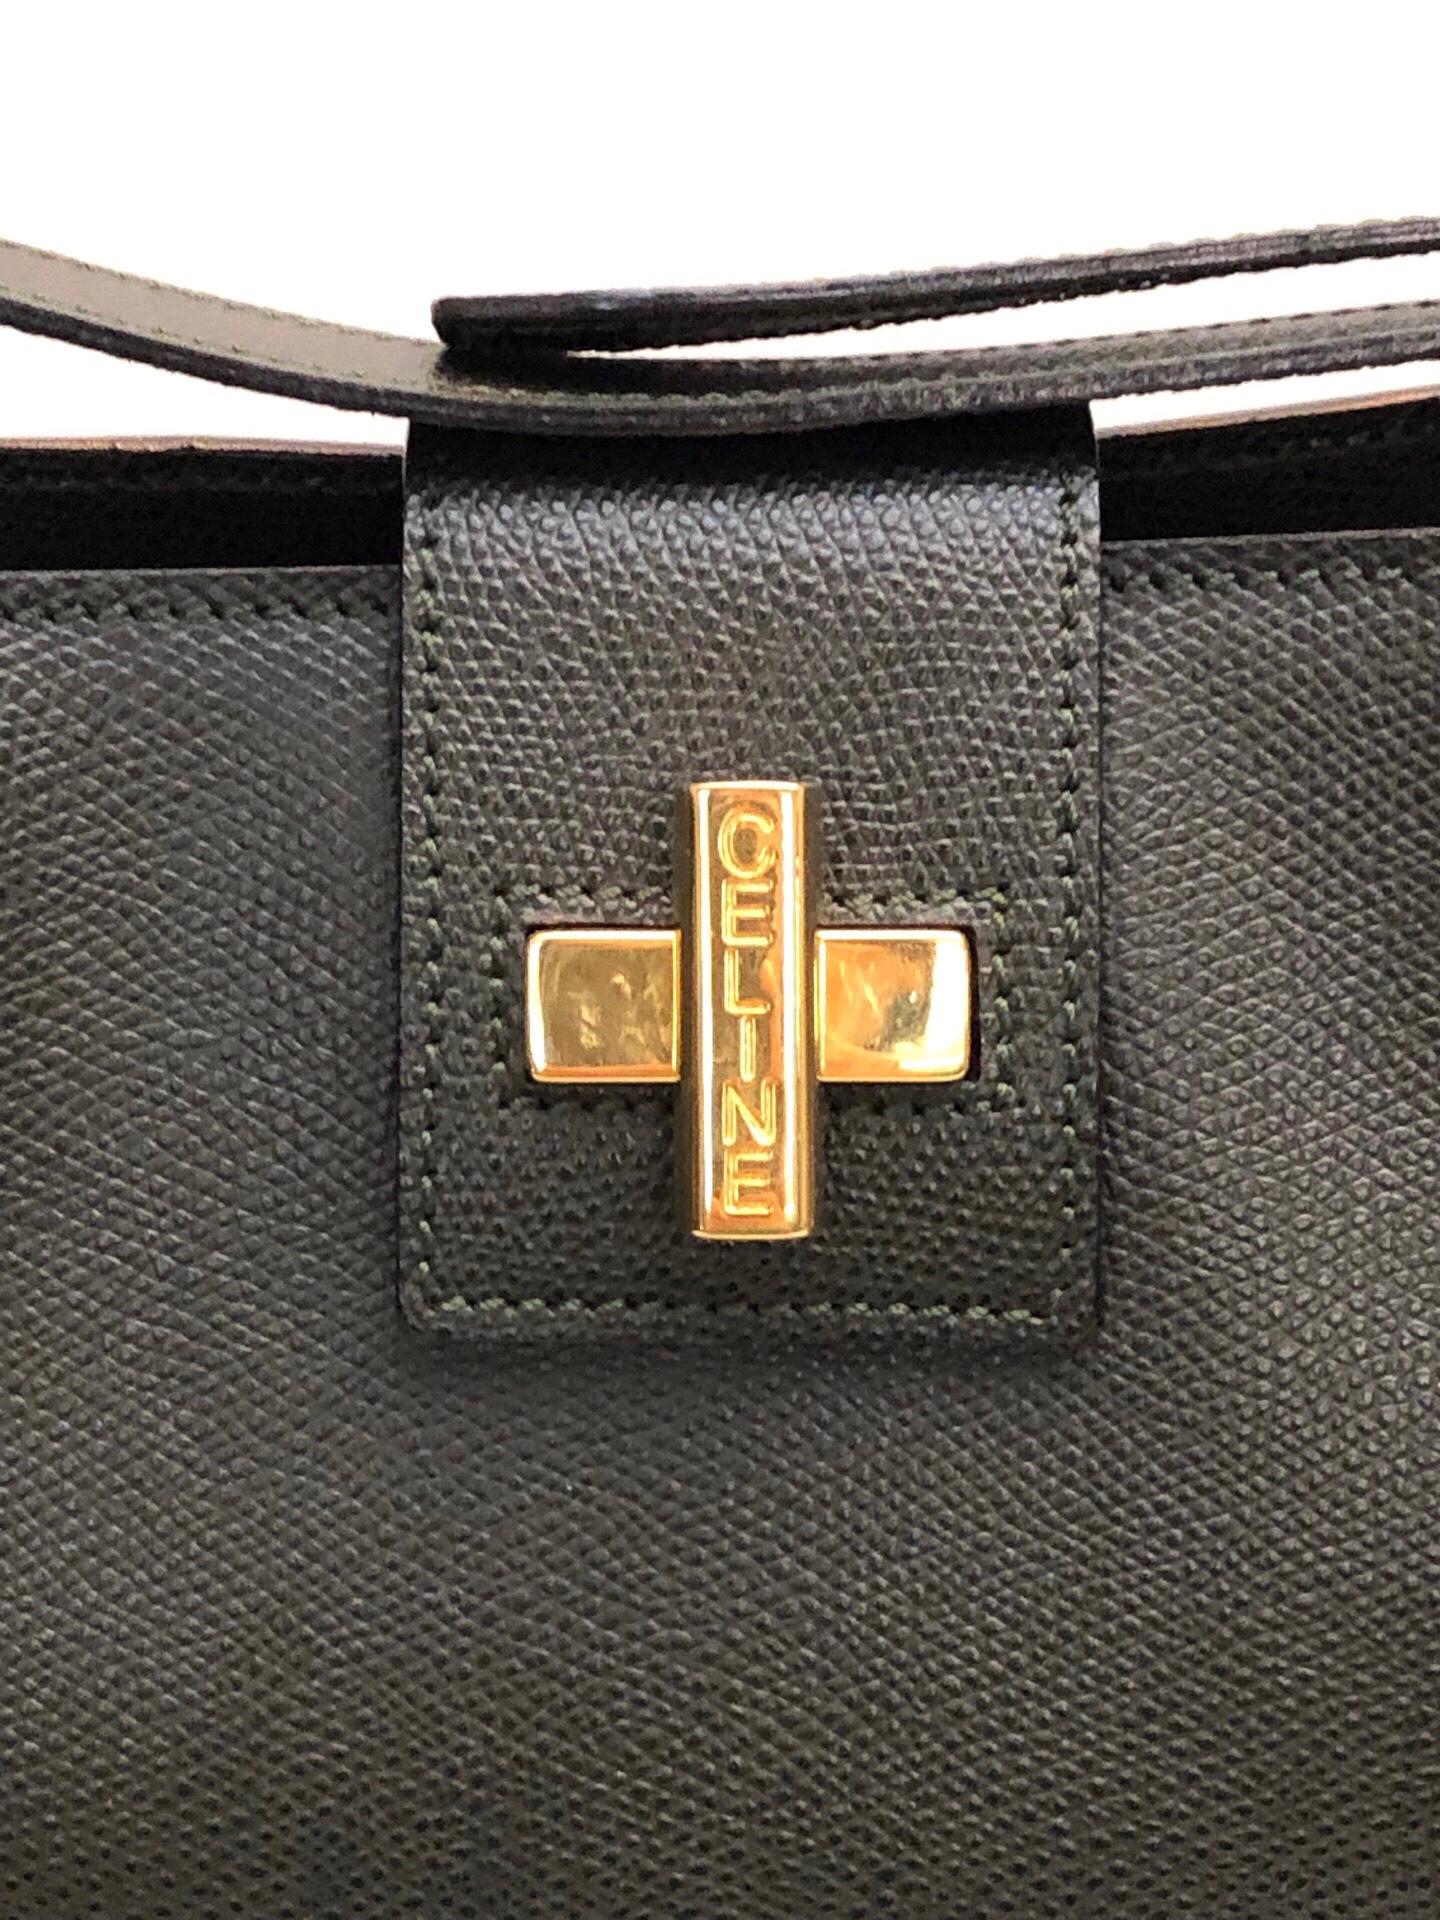 - Celine dark green leather shoulder bag.

- Gold-toned hardware “Celine” turn-lock closure.

- Red leather interior with zip pocket closure. 

- Size: 24cm x 27cm x 8.2cm. Drop: 31 to 52cm( adjustable strap). 

